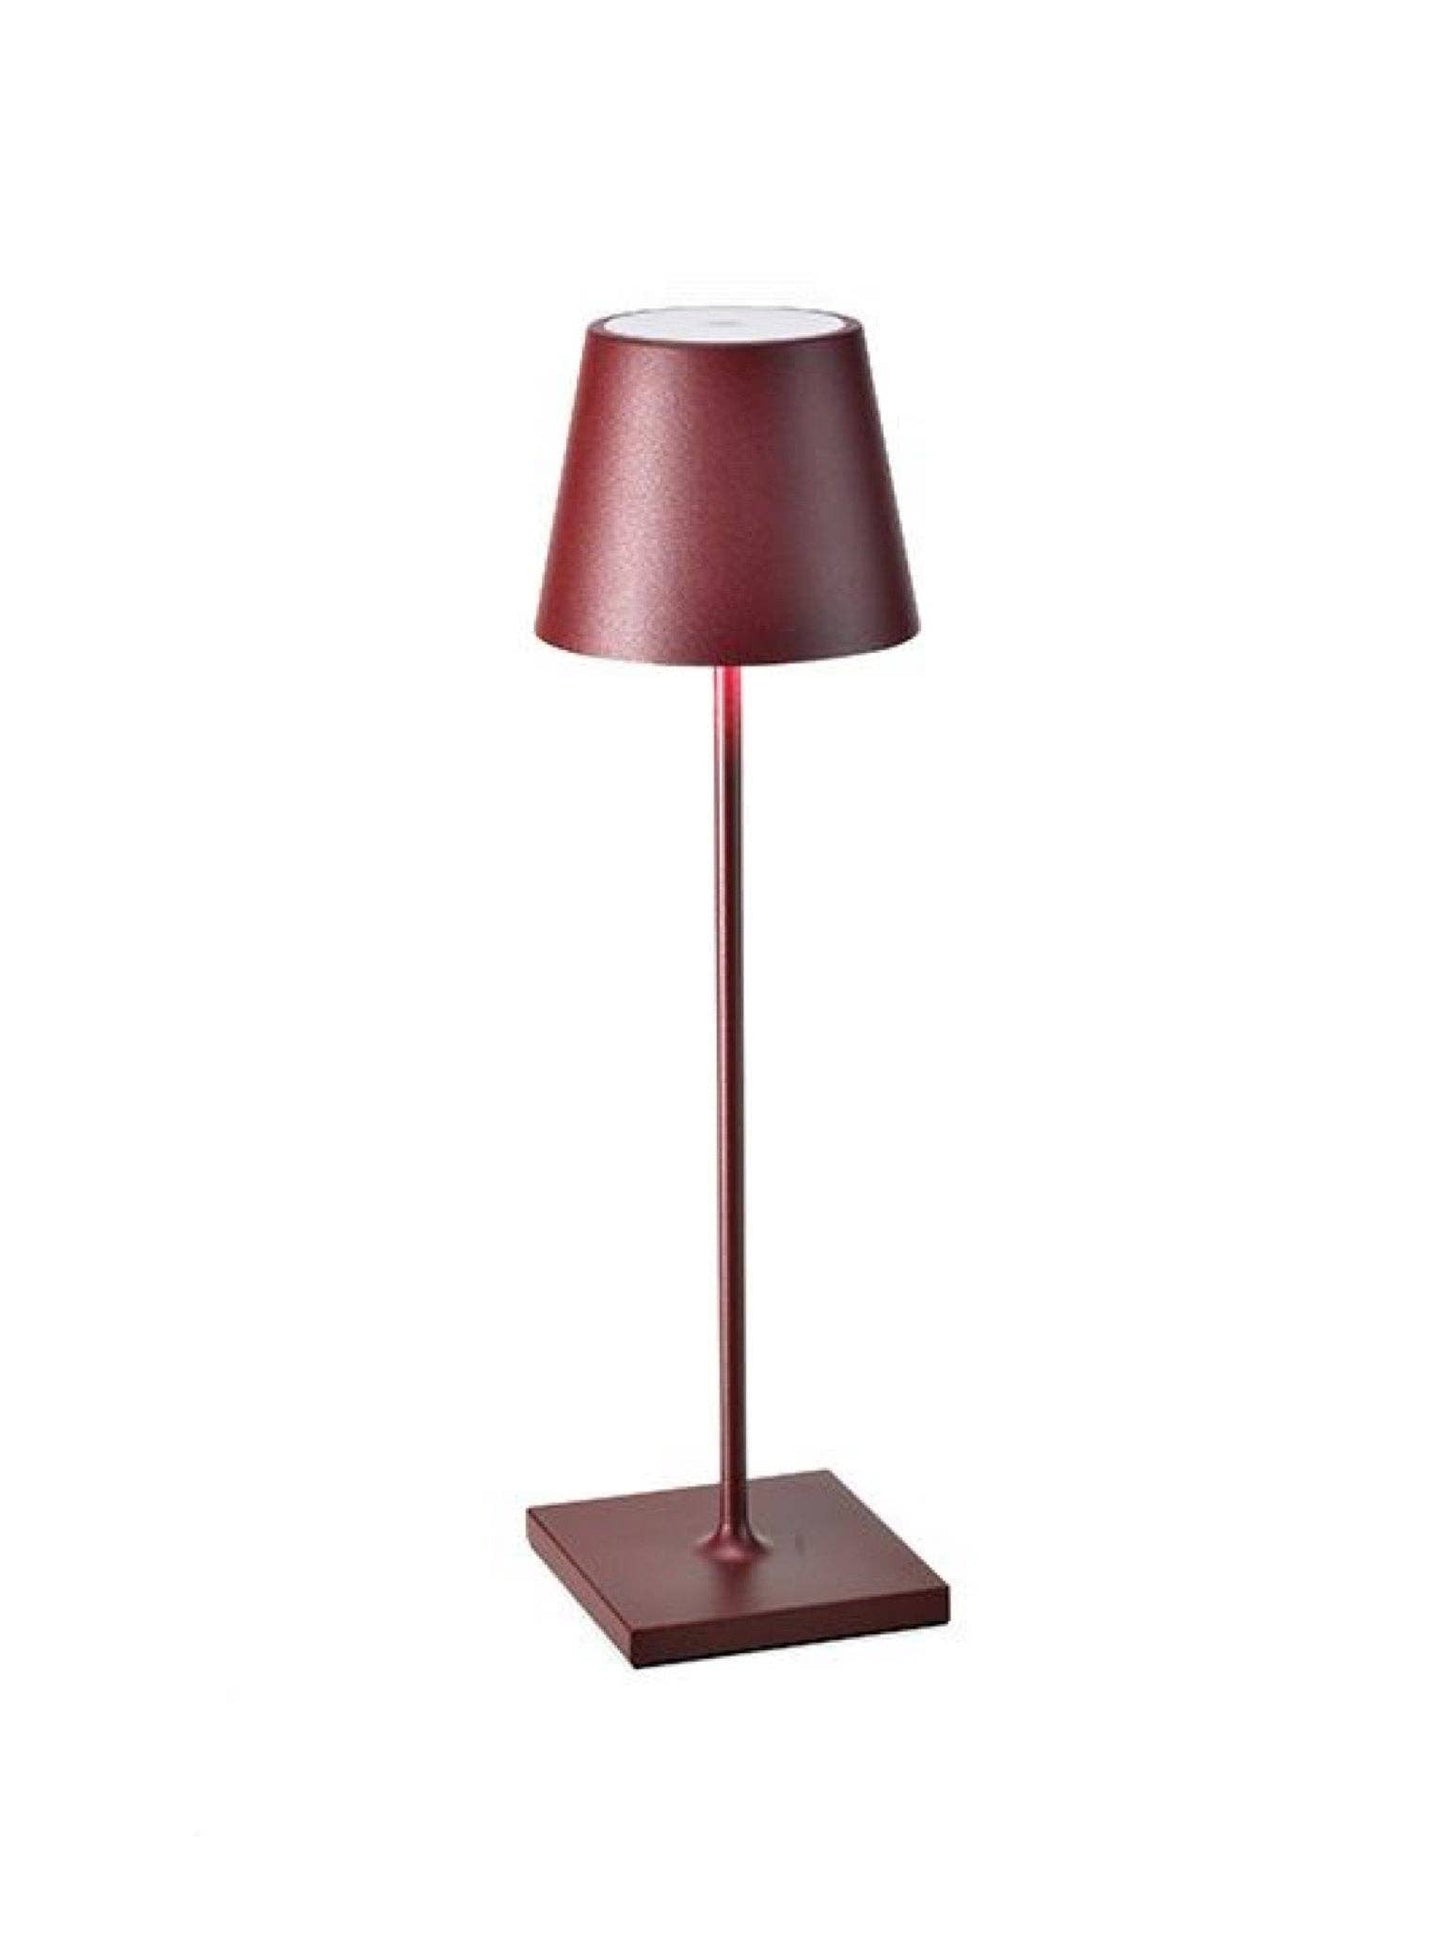 Poldina Pro Cordless Lamp - Ruby Red